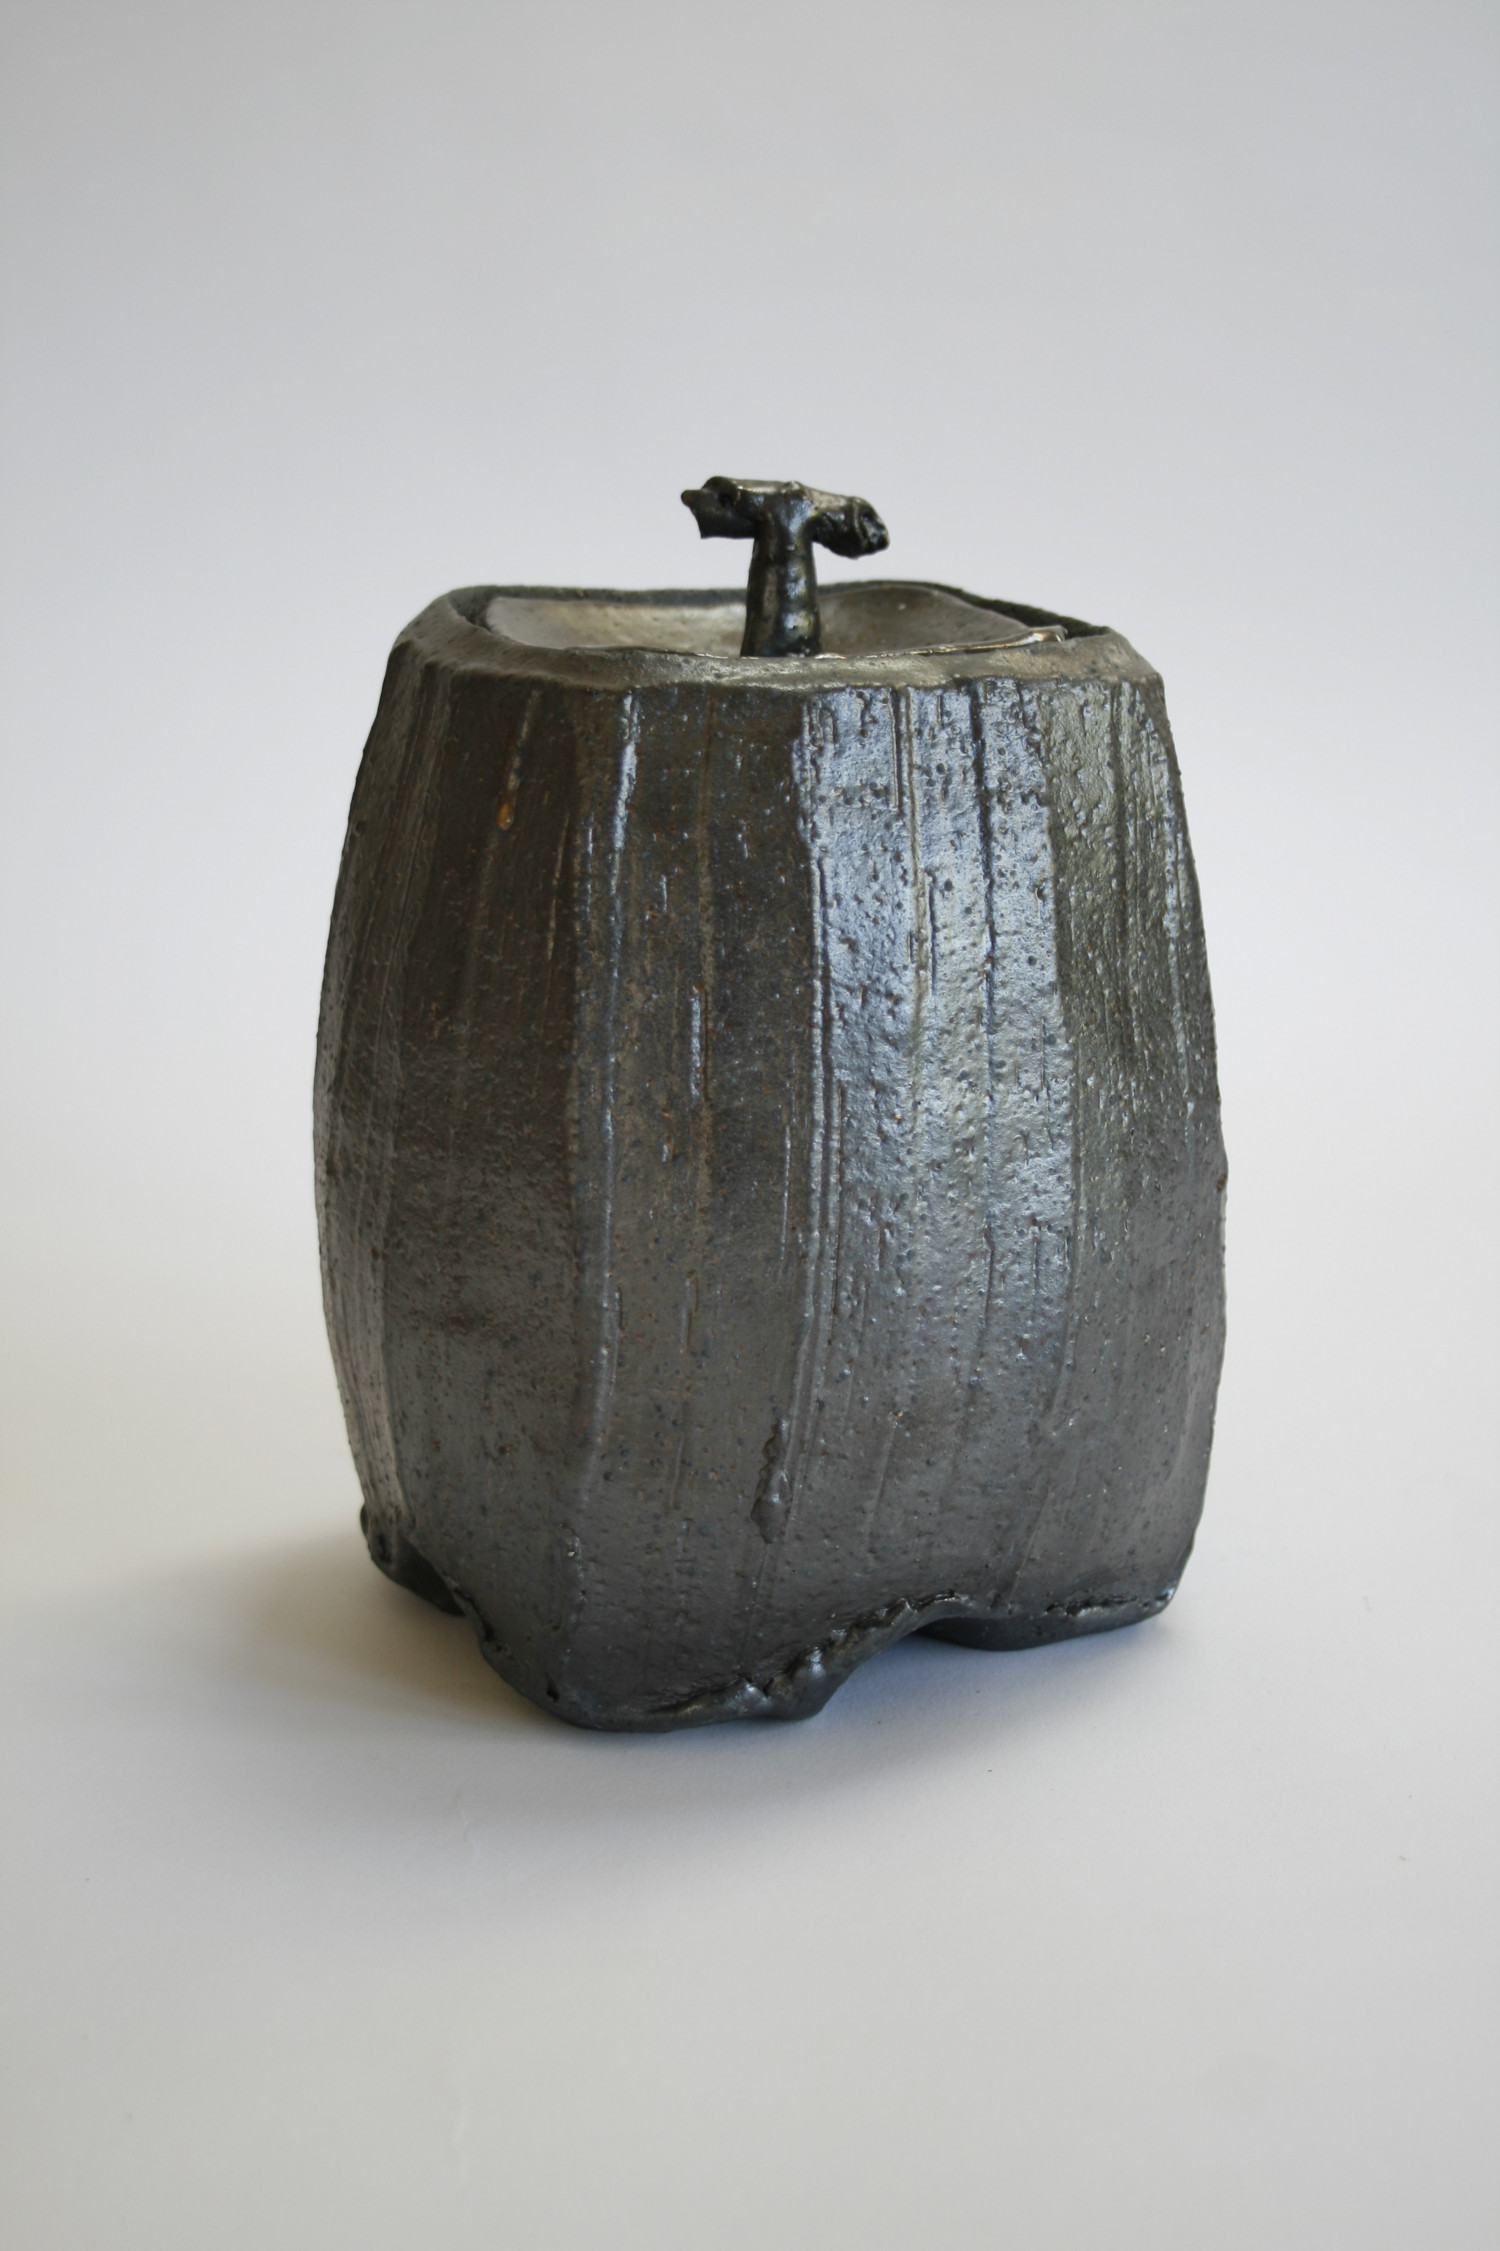 A Persimmon Jar